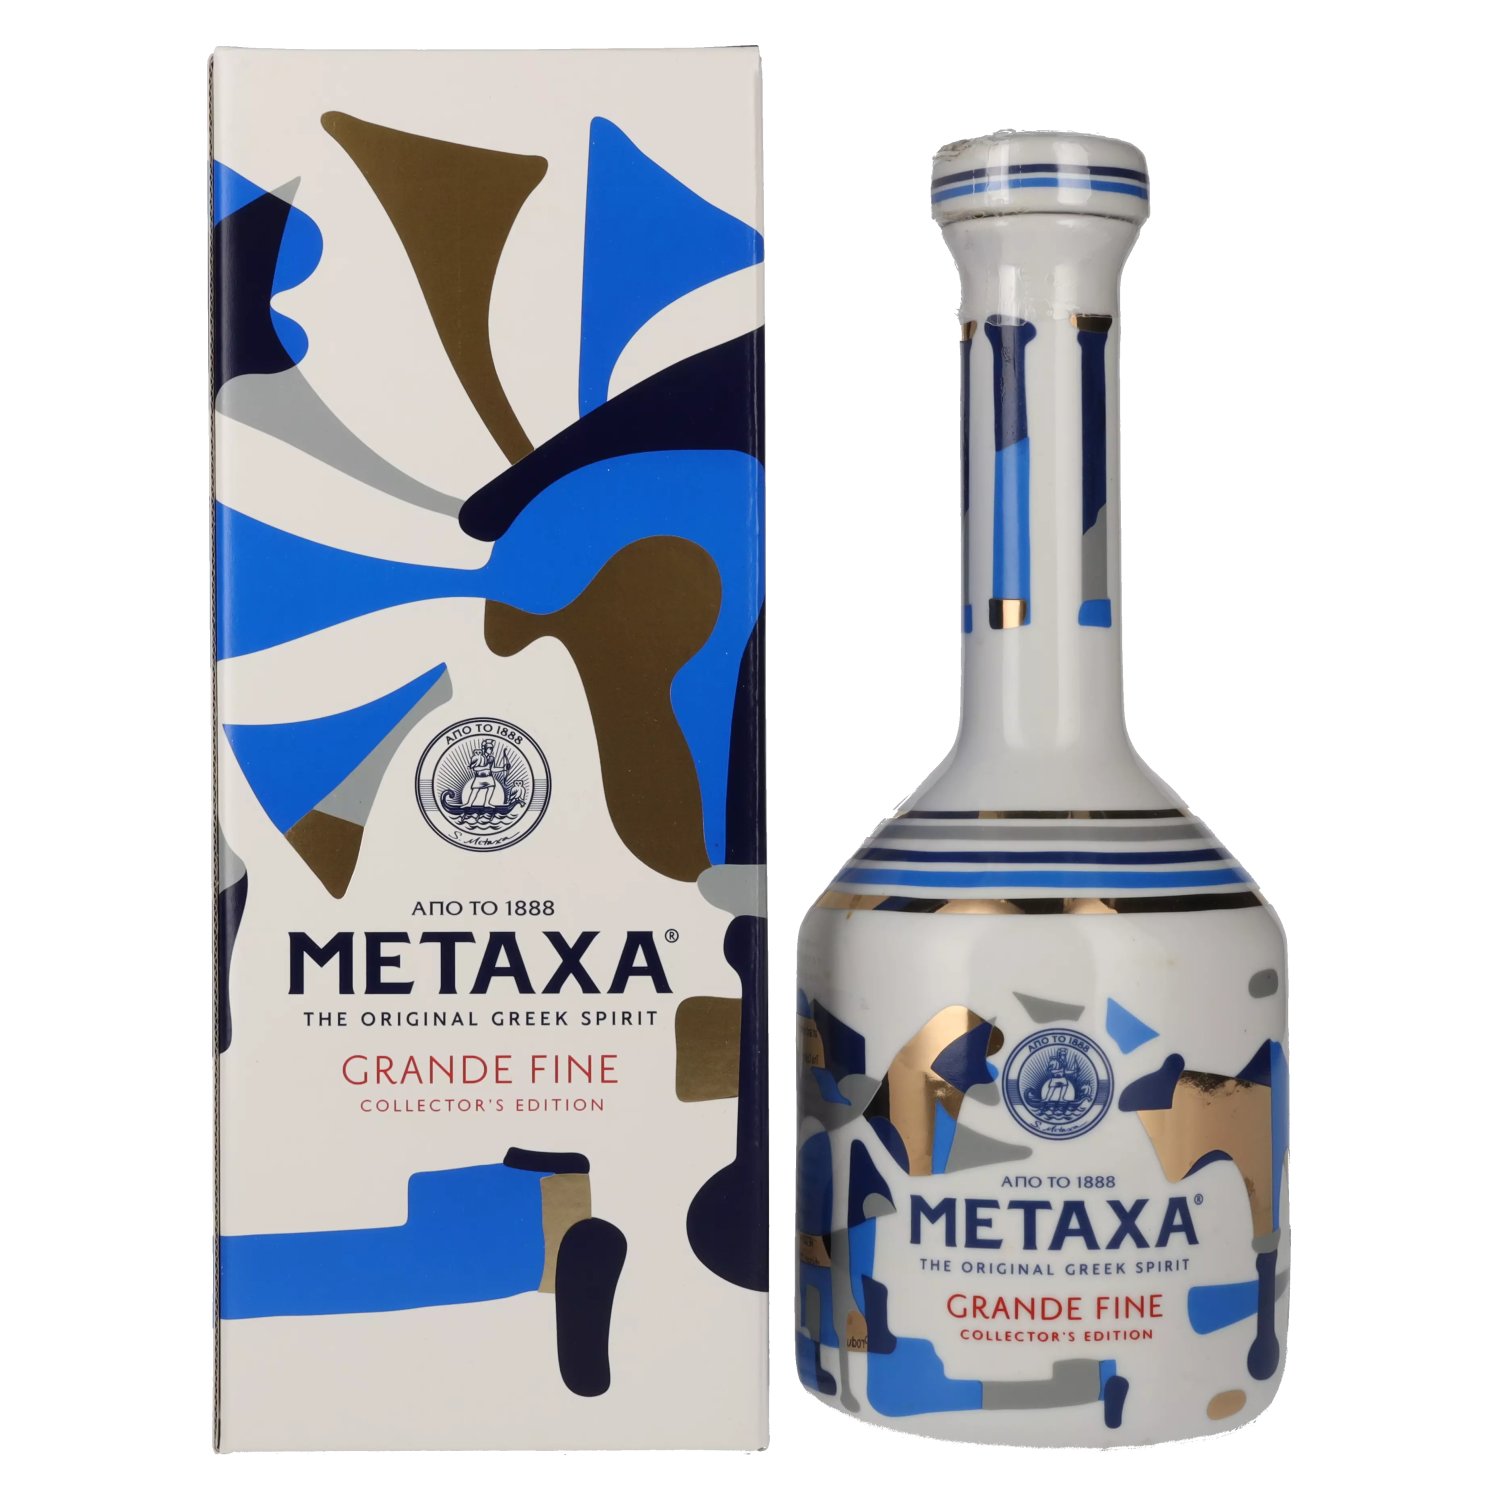 E-shop Metaxa Grande Fine 2 Collectors Edition 40% 0,7L v kartóne